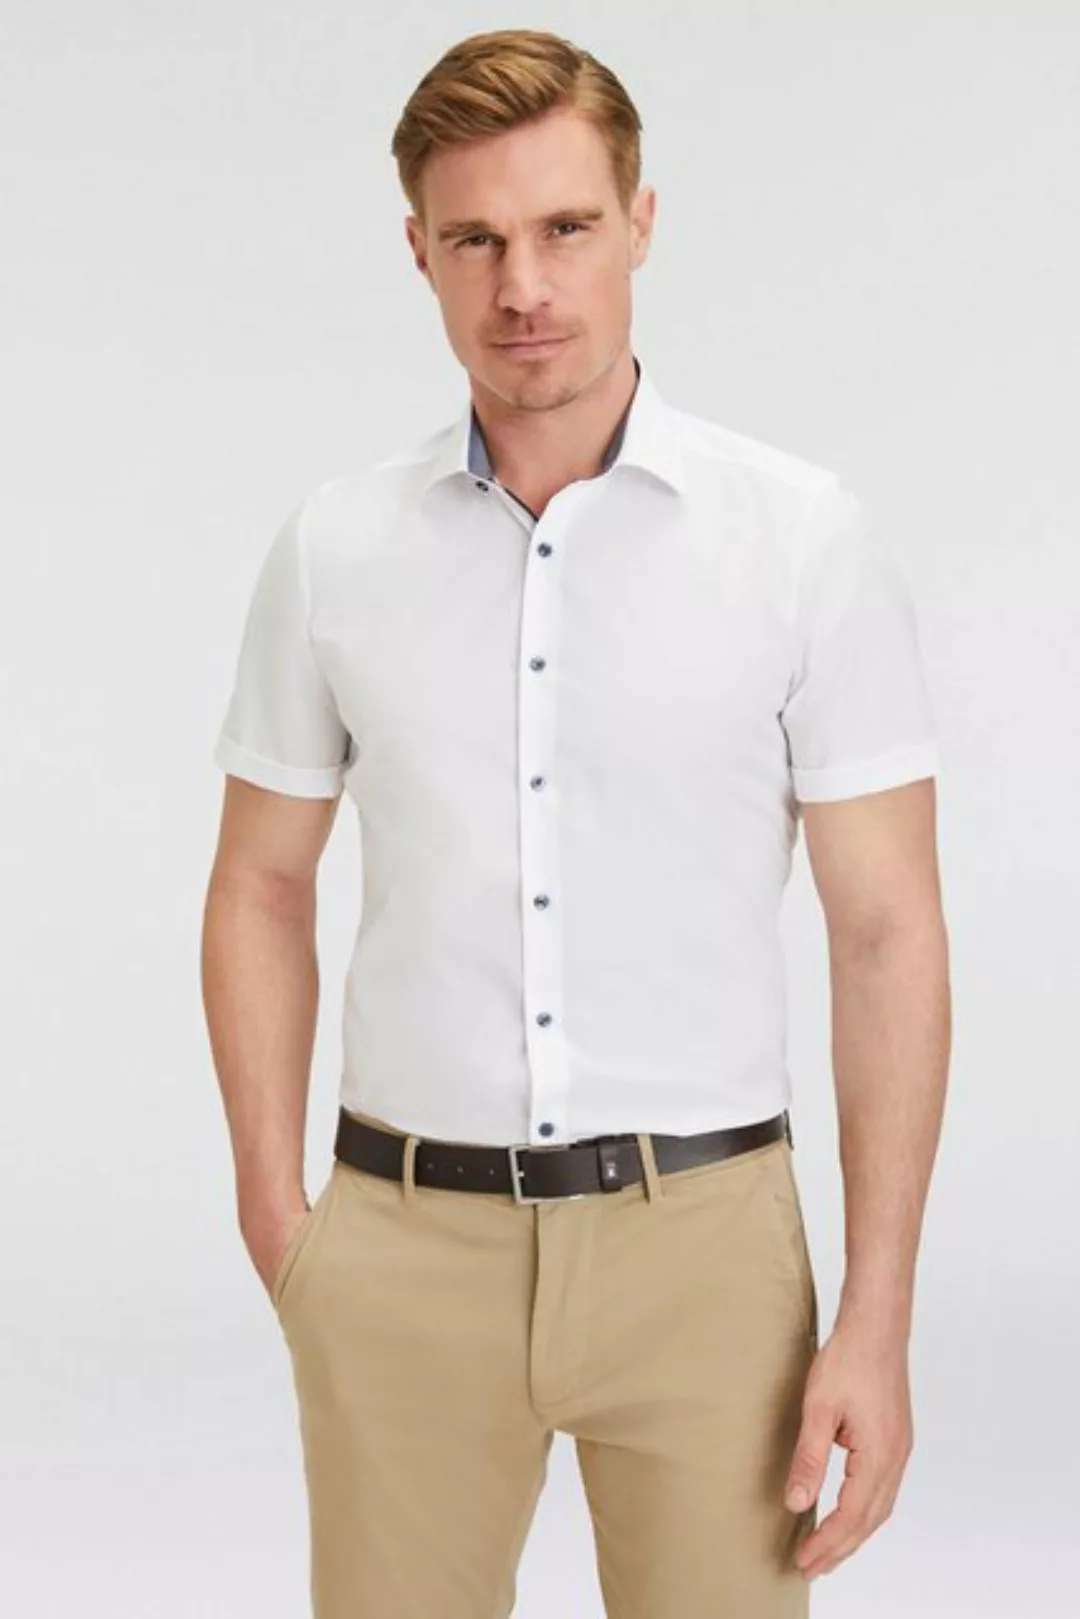 OLYMP Kurzarmhemd - Hemd - Businesshemd - Level Five - body fit - New York günstig online kaufen